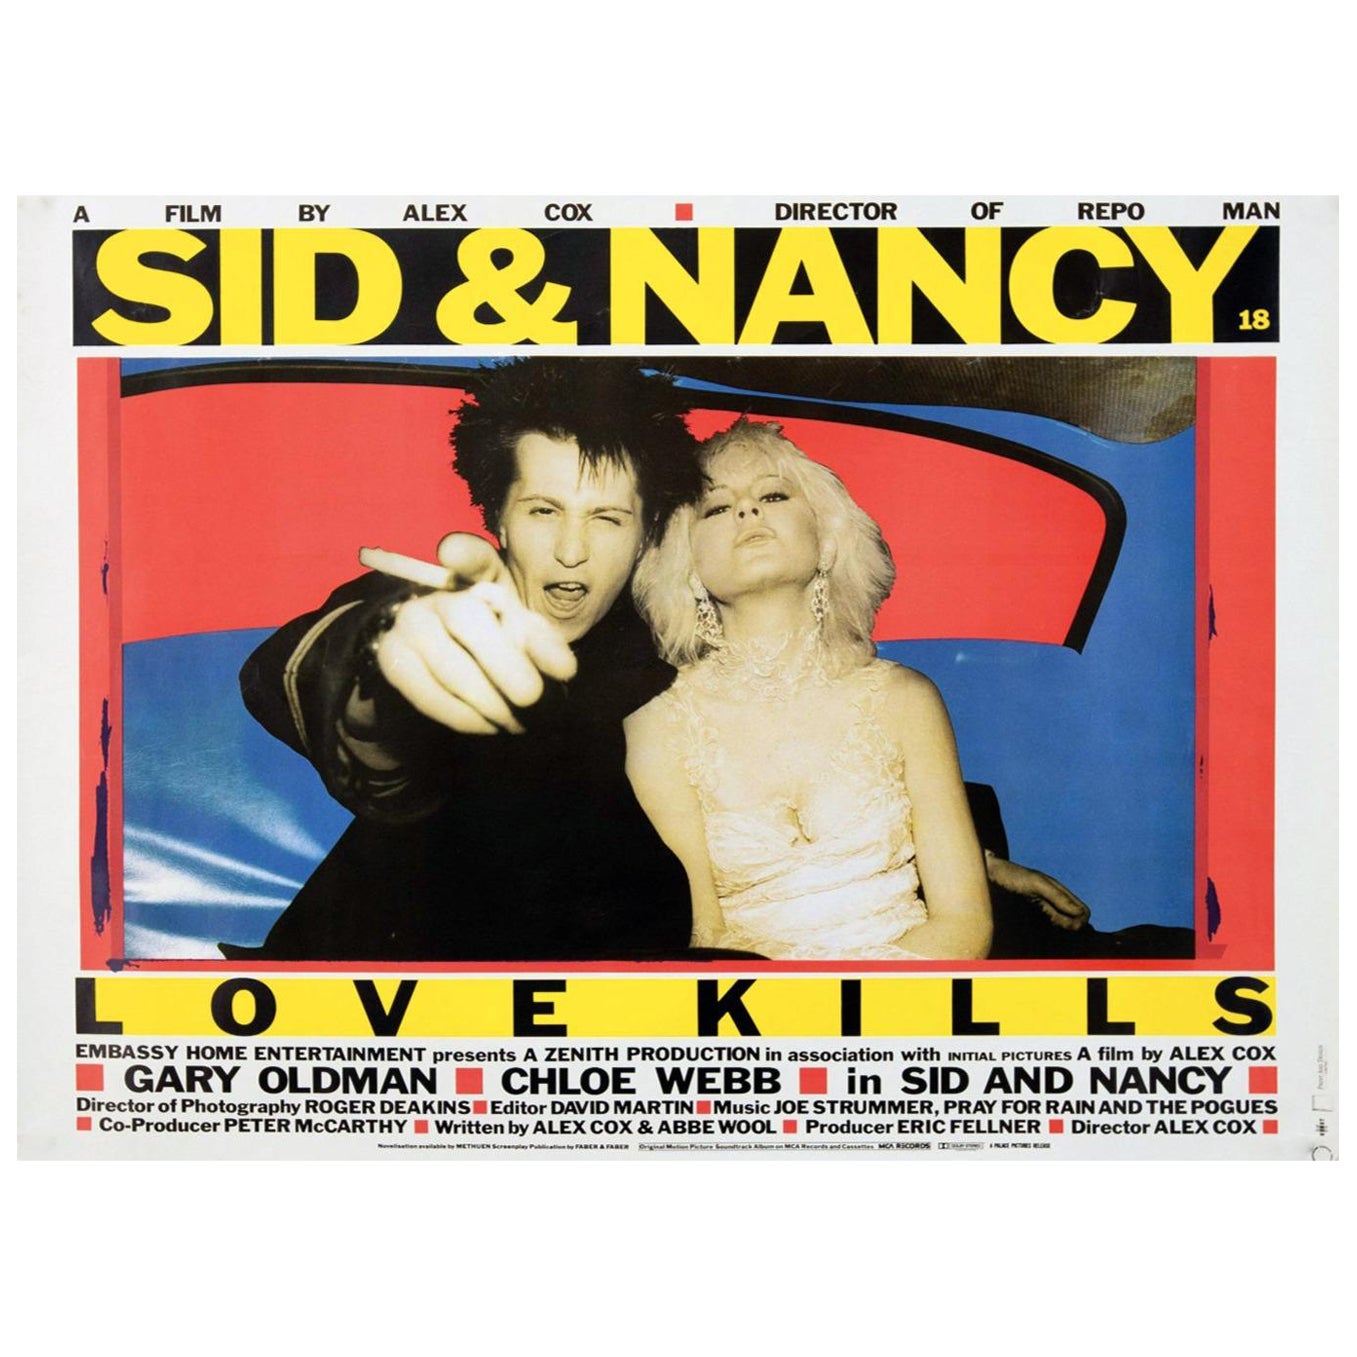 Affiche vintage originale Sid & Nancy, 1983